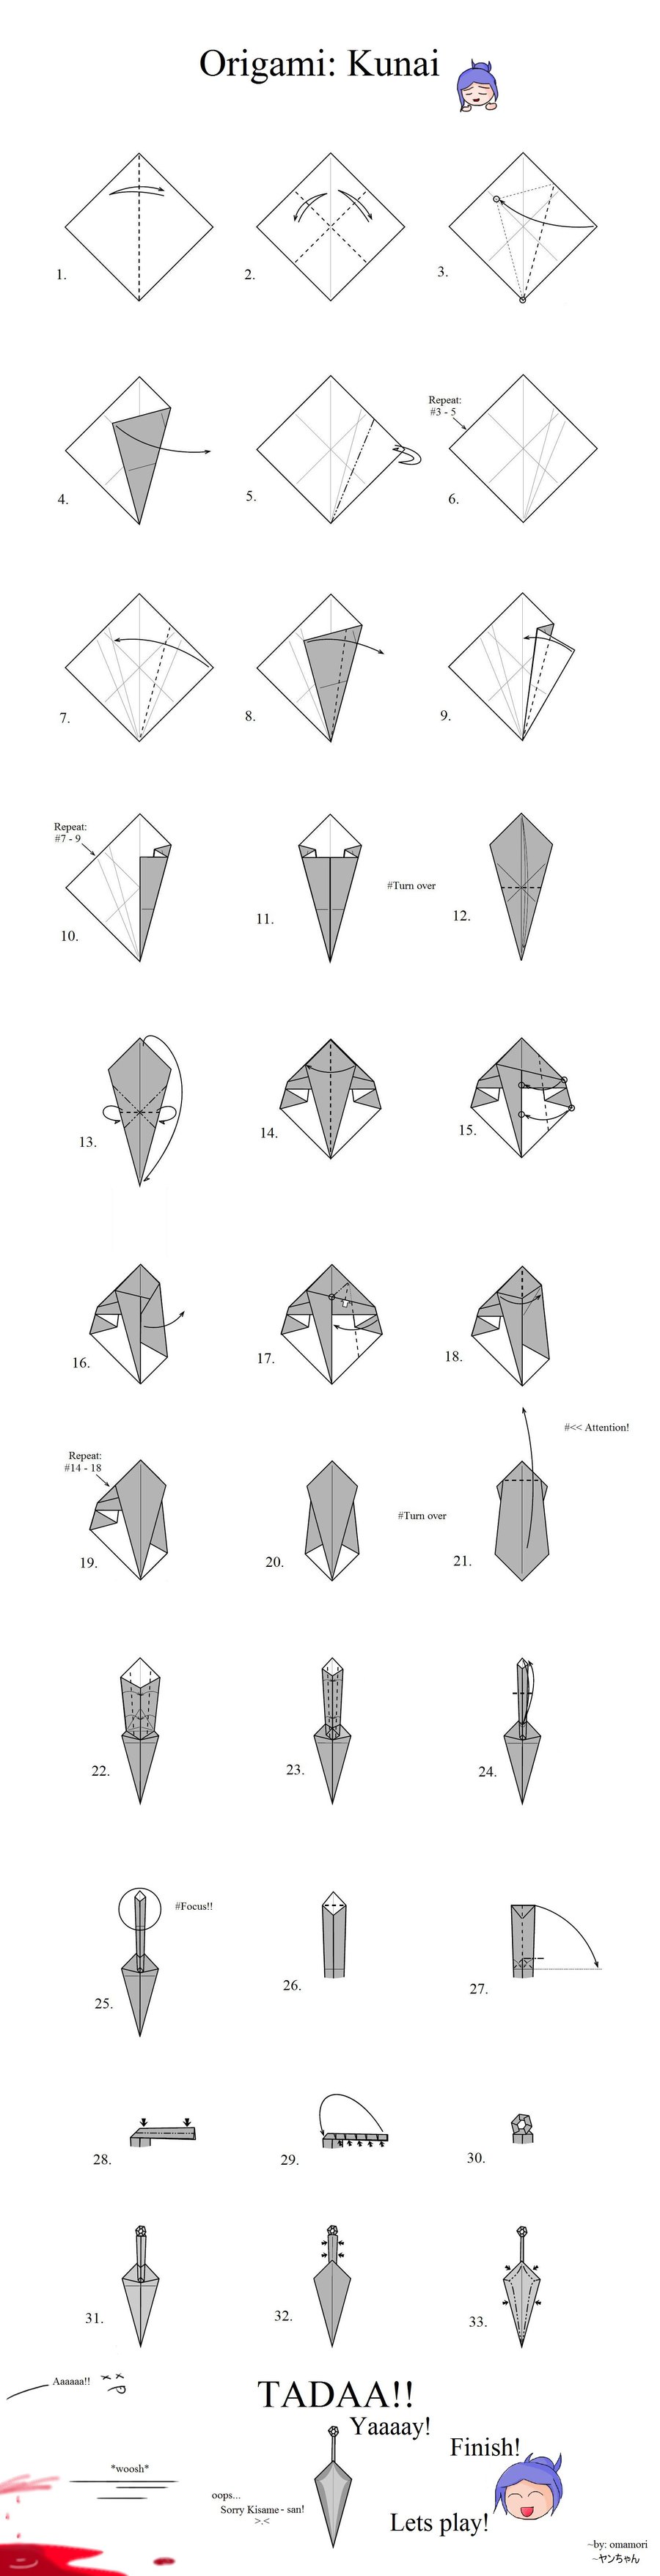 kunai origami